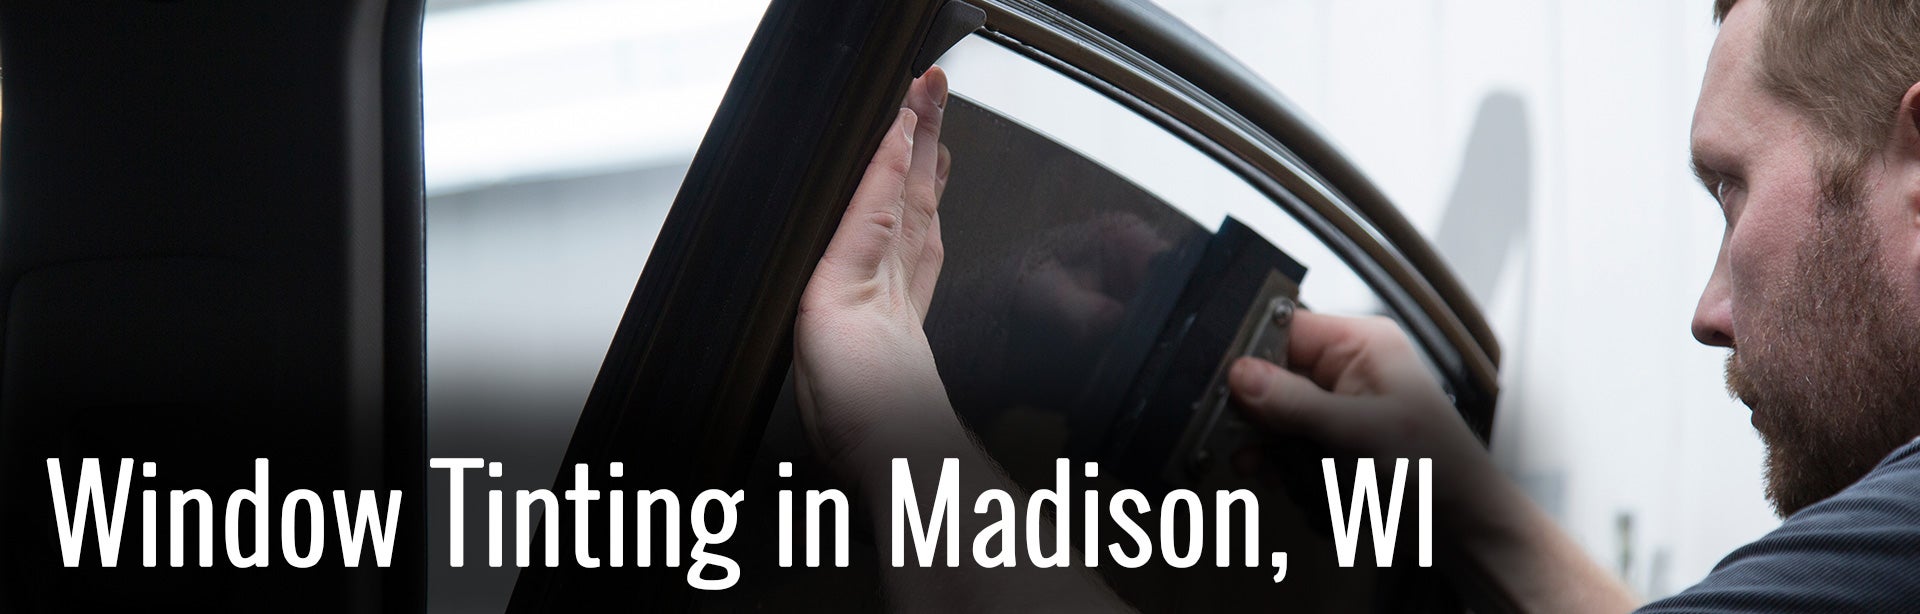 Window Tinting Service | Madison WI | Middleton | Fitchburg